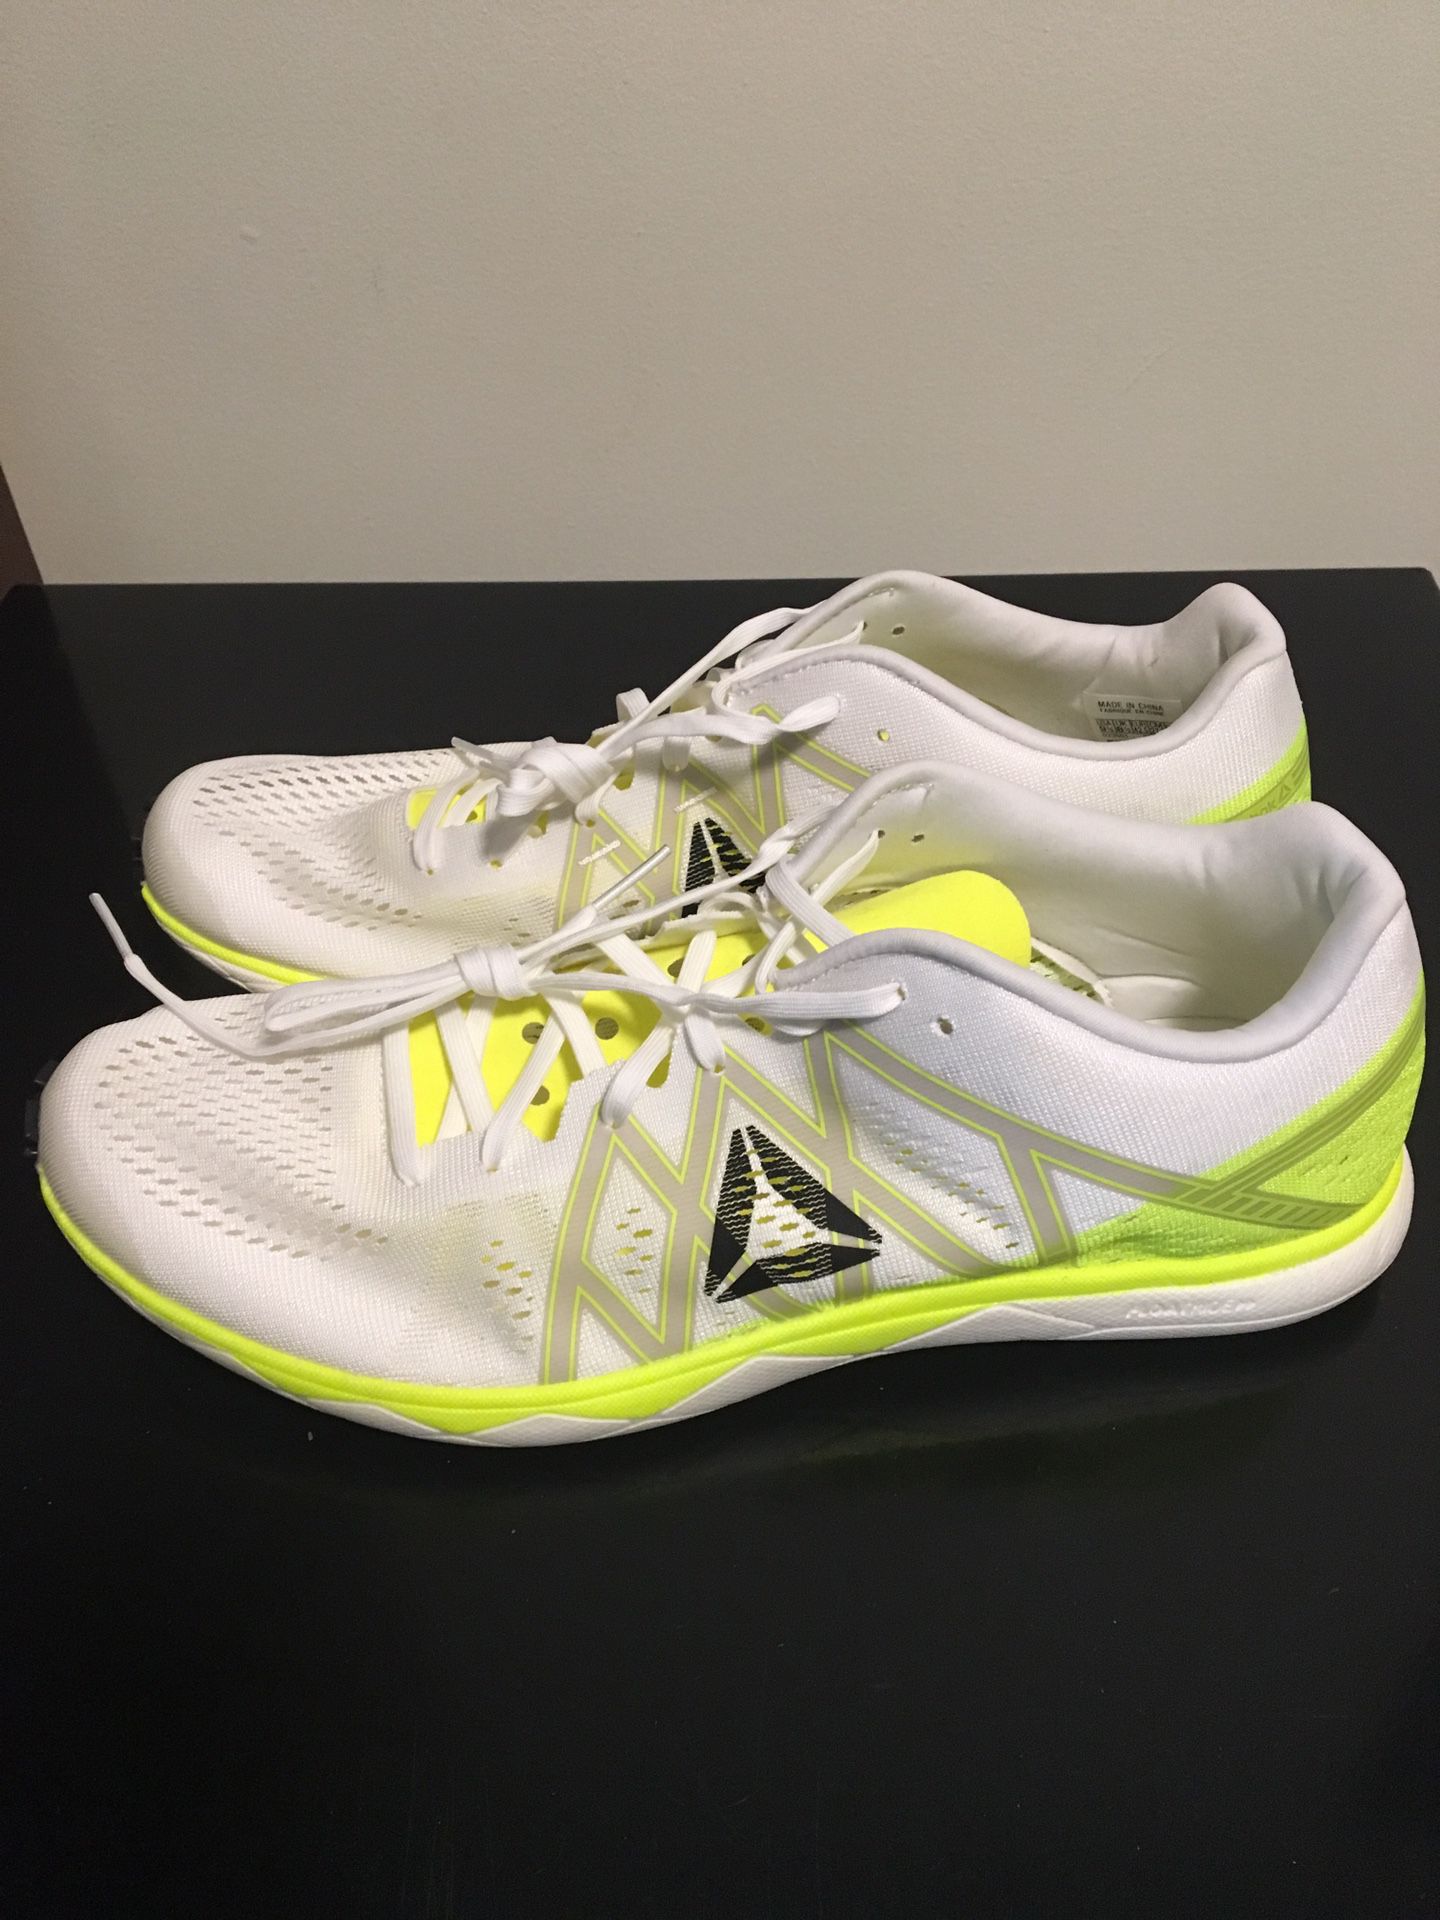 Men's Brand New Reebok Floatride Run Fast Pro Size 9.5 Neon / White Shoes